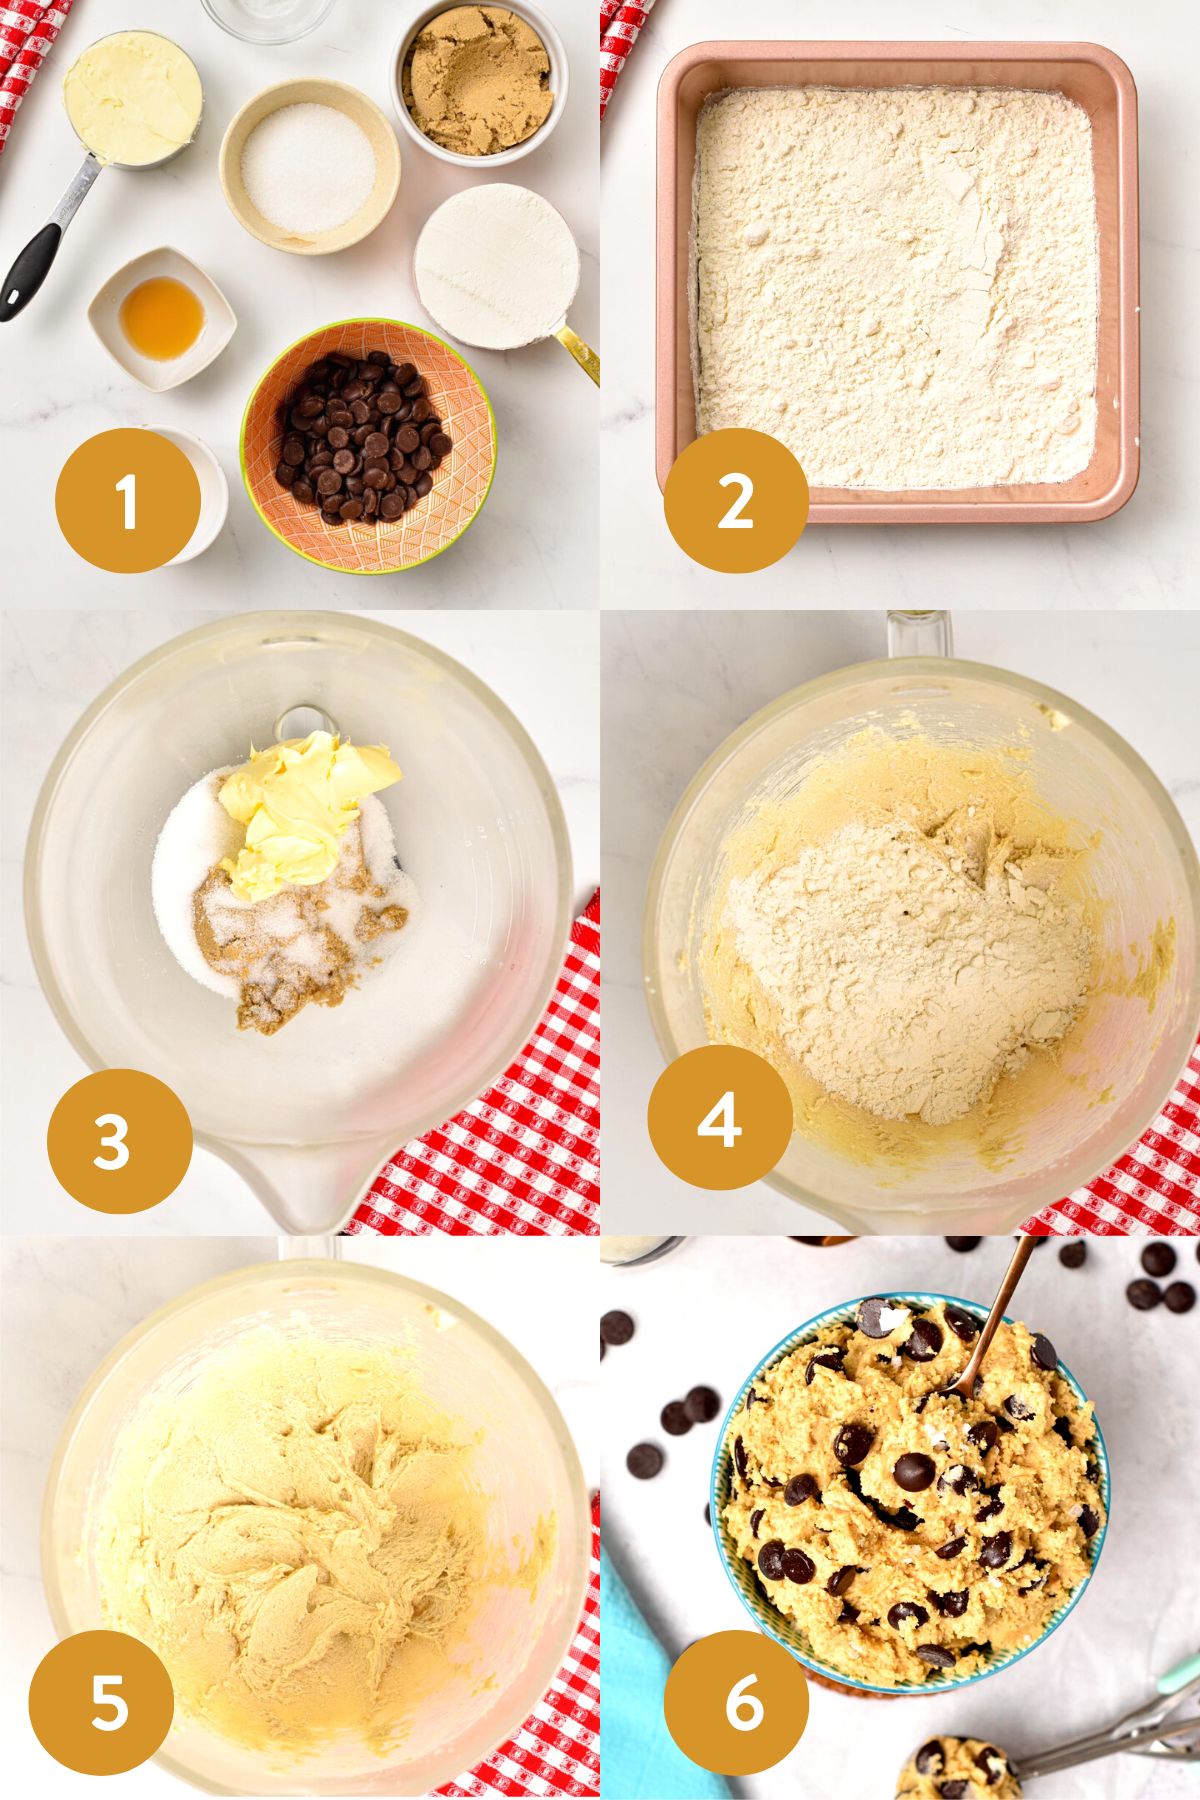 How to make Vegan Edible Cookie Dough